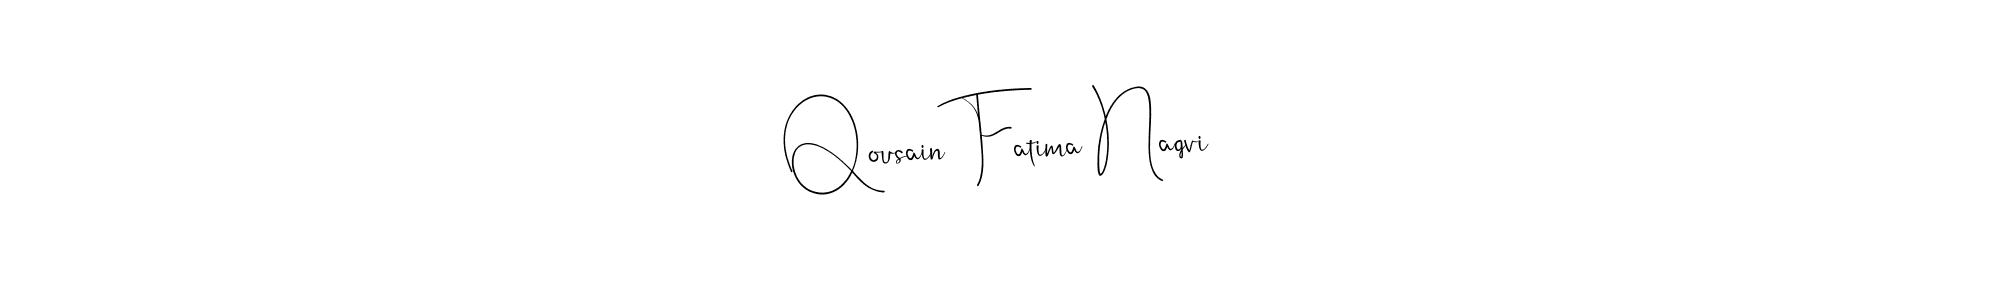 How to Draw Qousain Fatima Naqvi signature style? Andilay-7BmLP is a latest design signature styles for name Qousain Fatima Naqvi. Qousain Fatima Naqvi signature style 4 images and pictures png